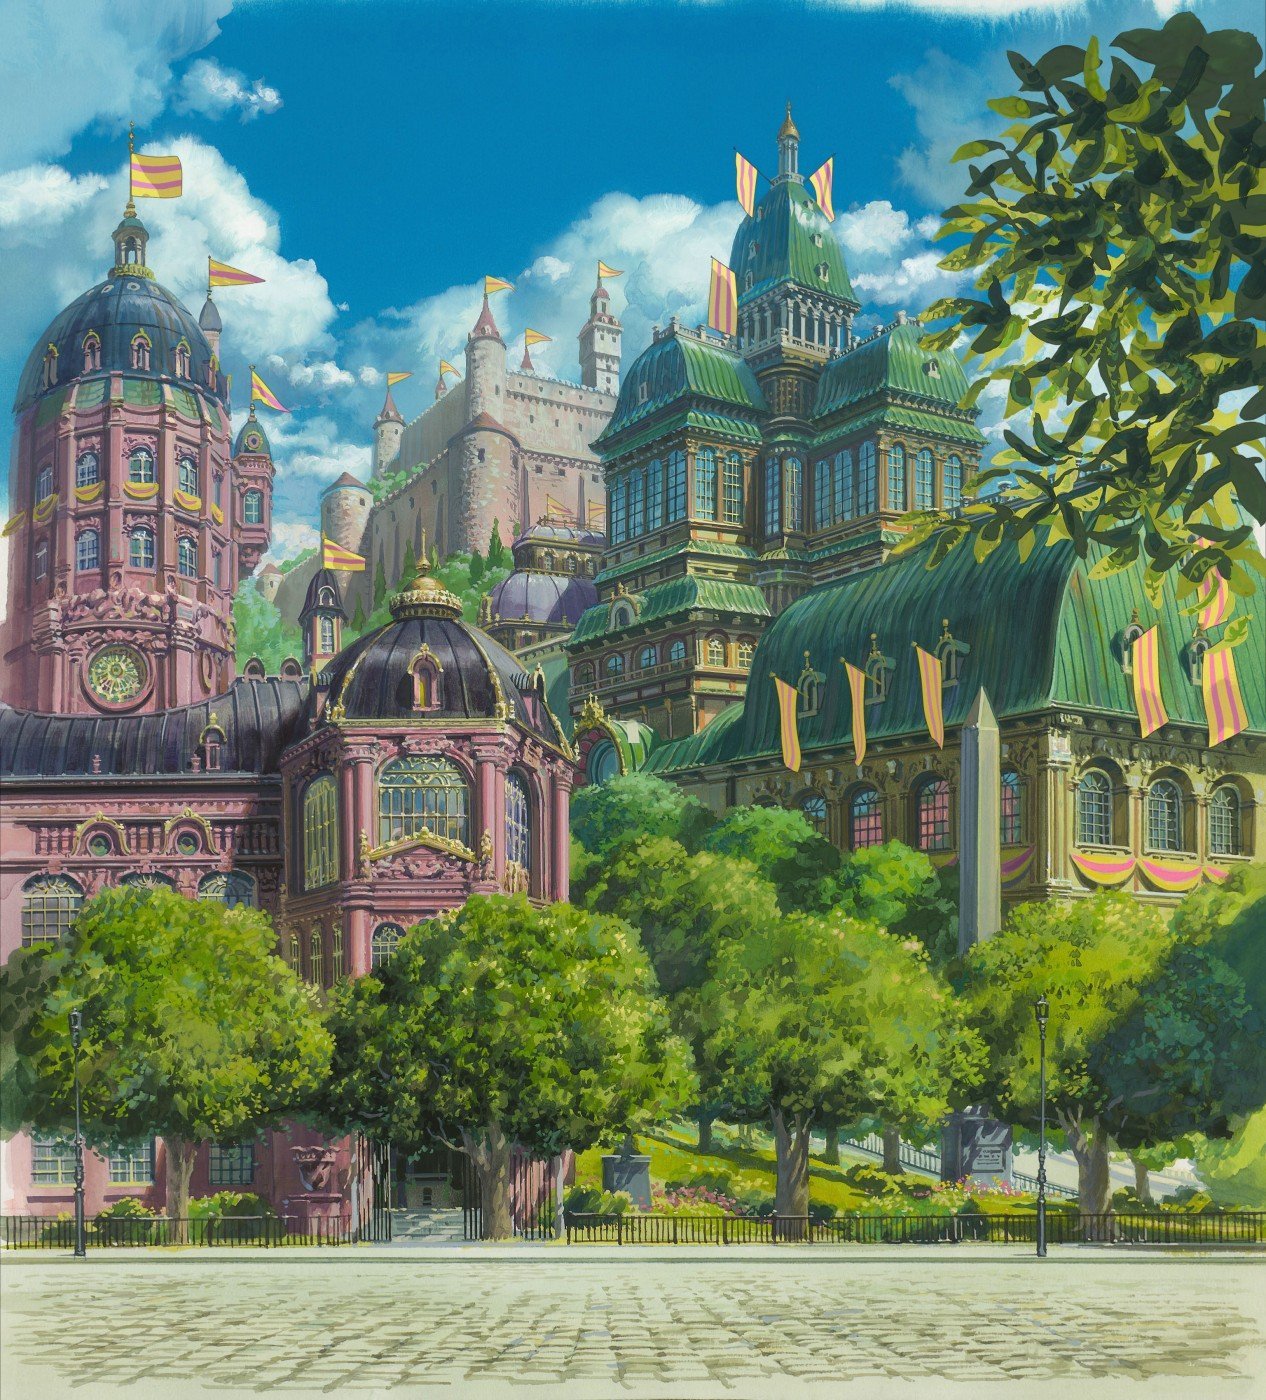 Jay Eaton / Studio Ghibli - Howl's Moving Castle